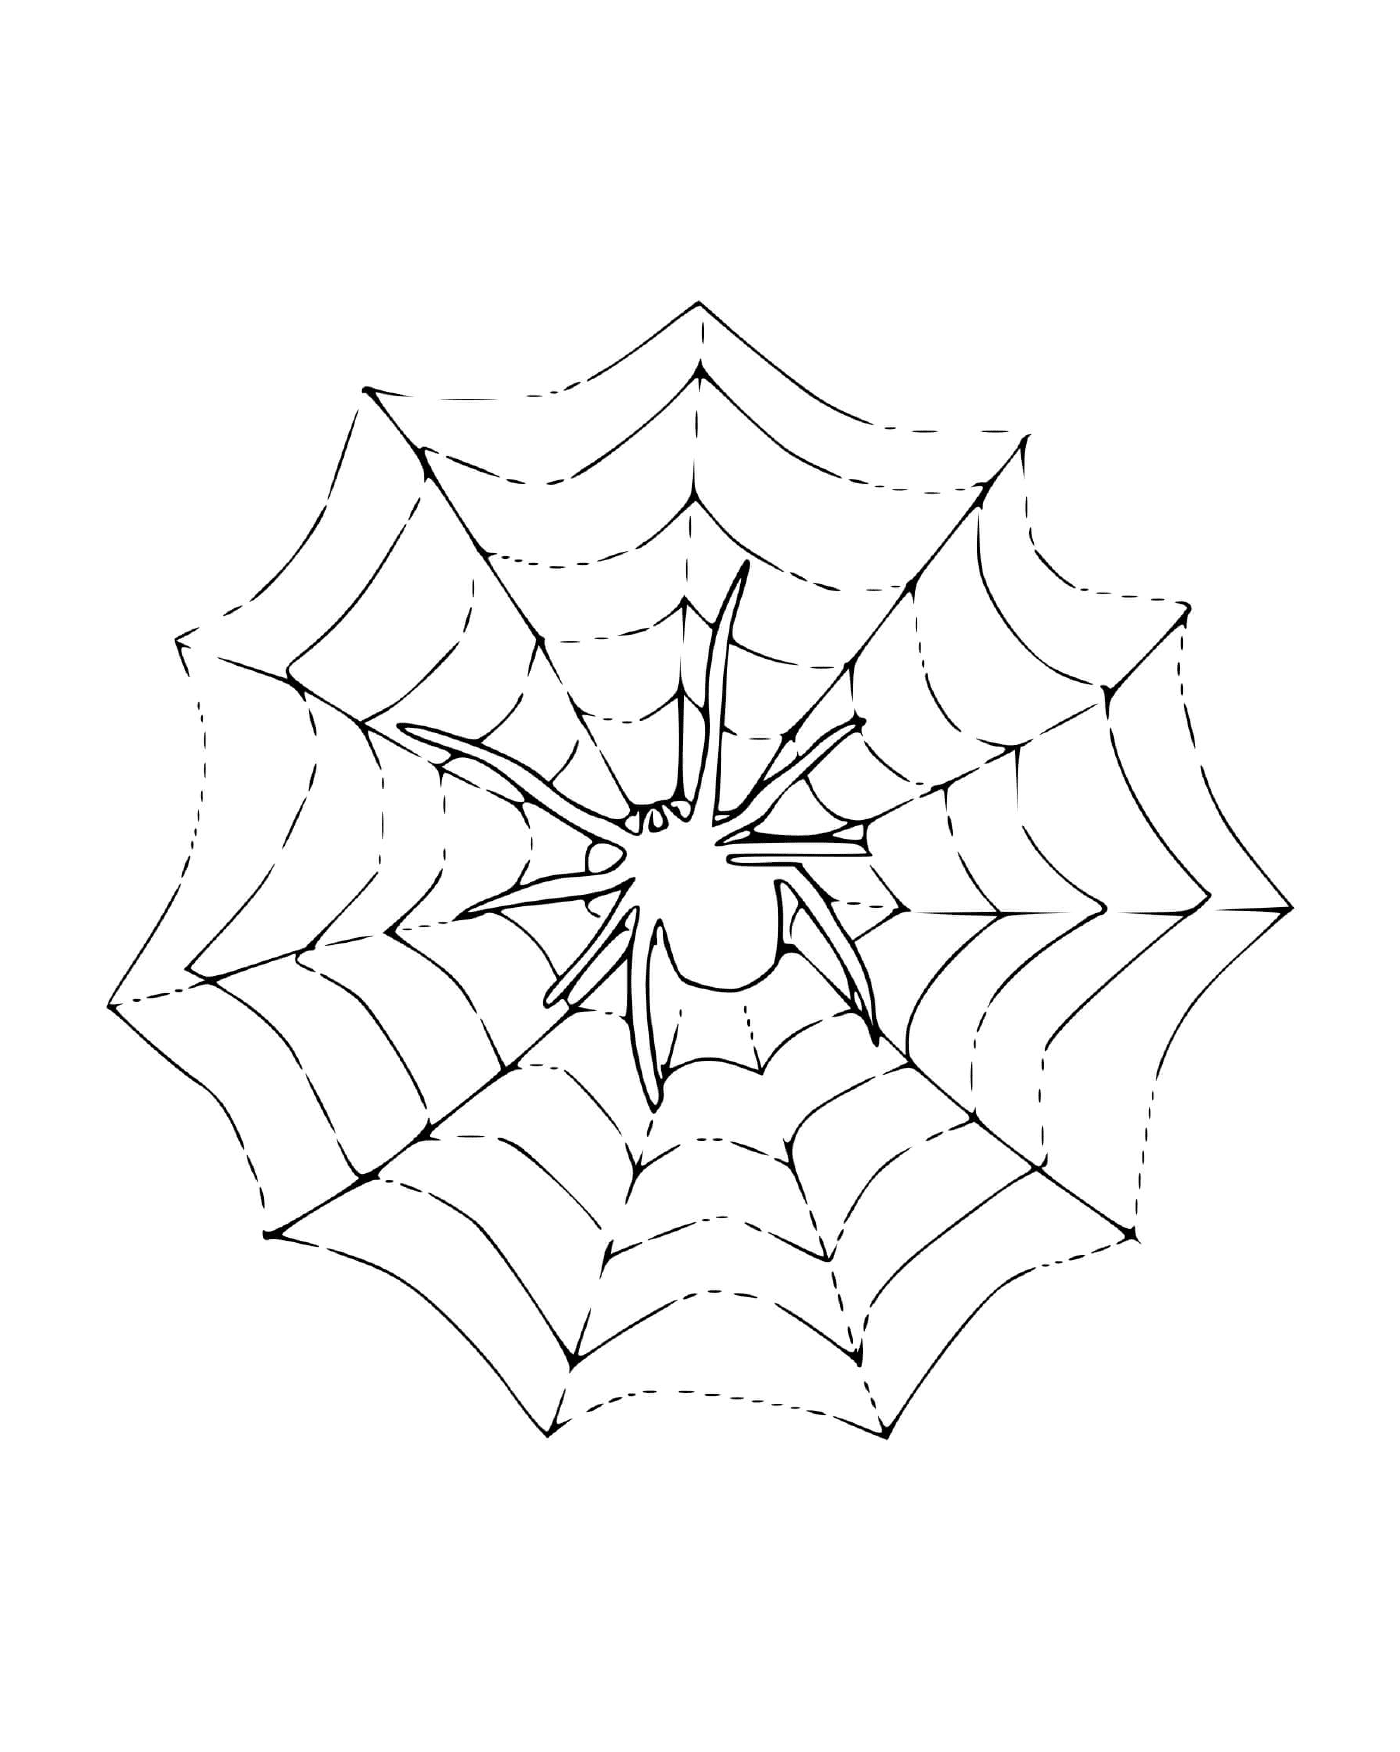  Un ragno seduto su una ragnatela 